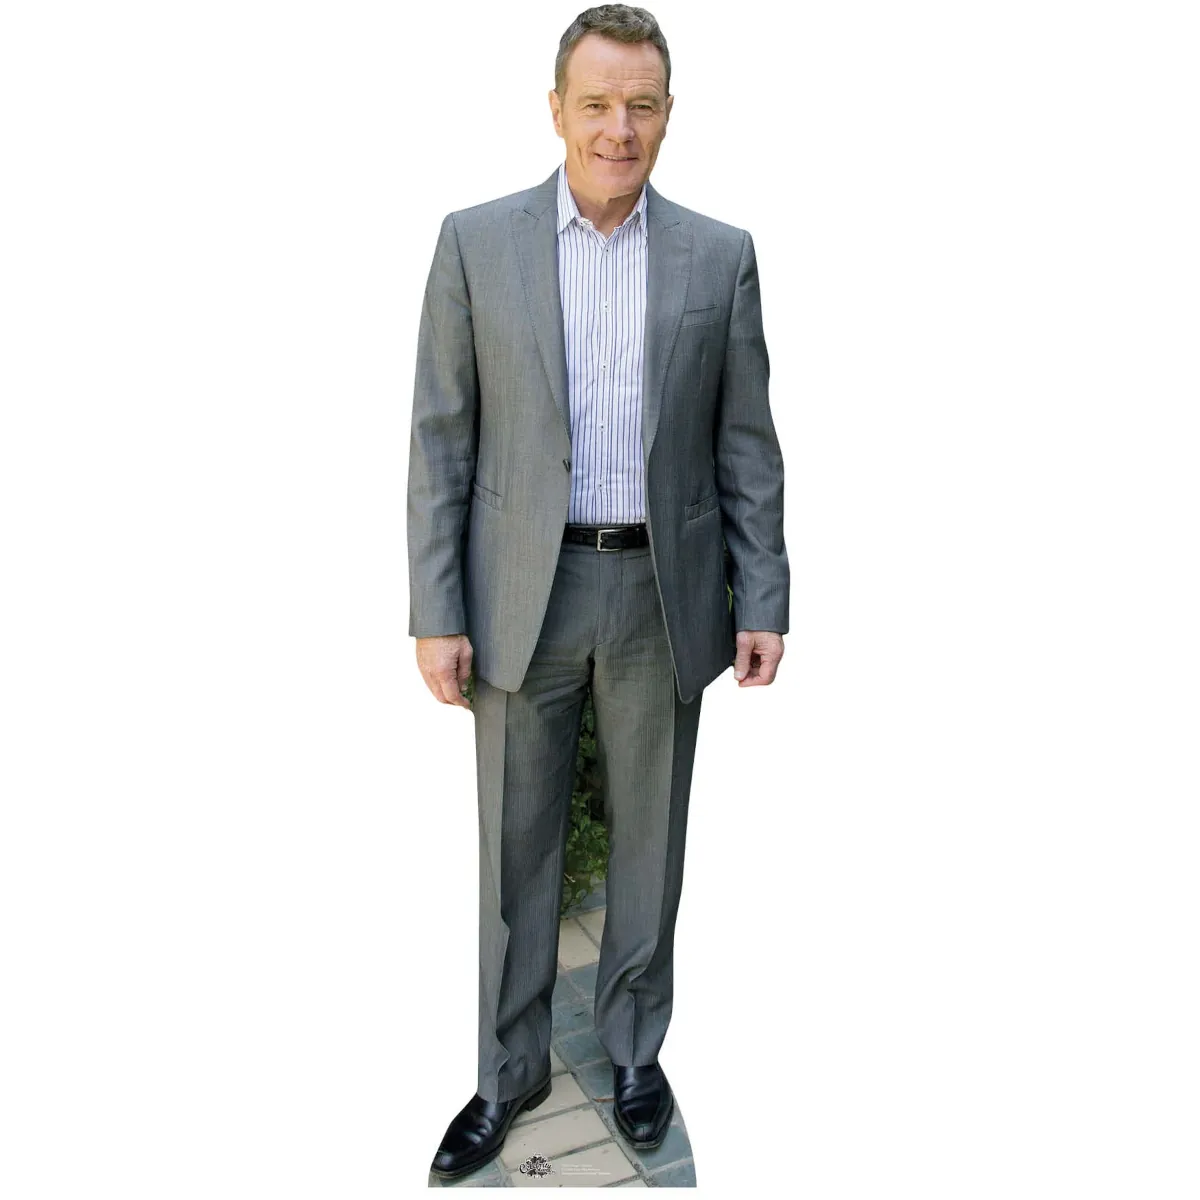 CS593 Bryan Cranston 'Grey Suit' (American Actor) Lifesize Cardboard Cutout Standee Front